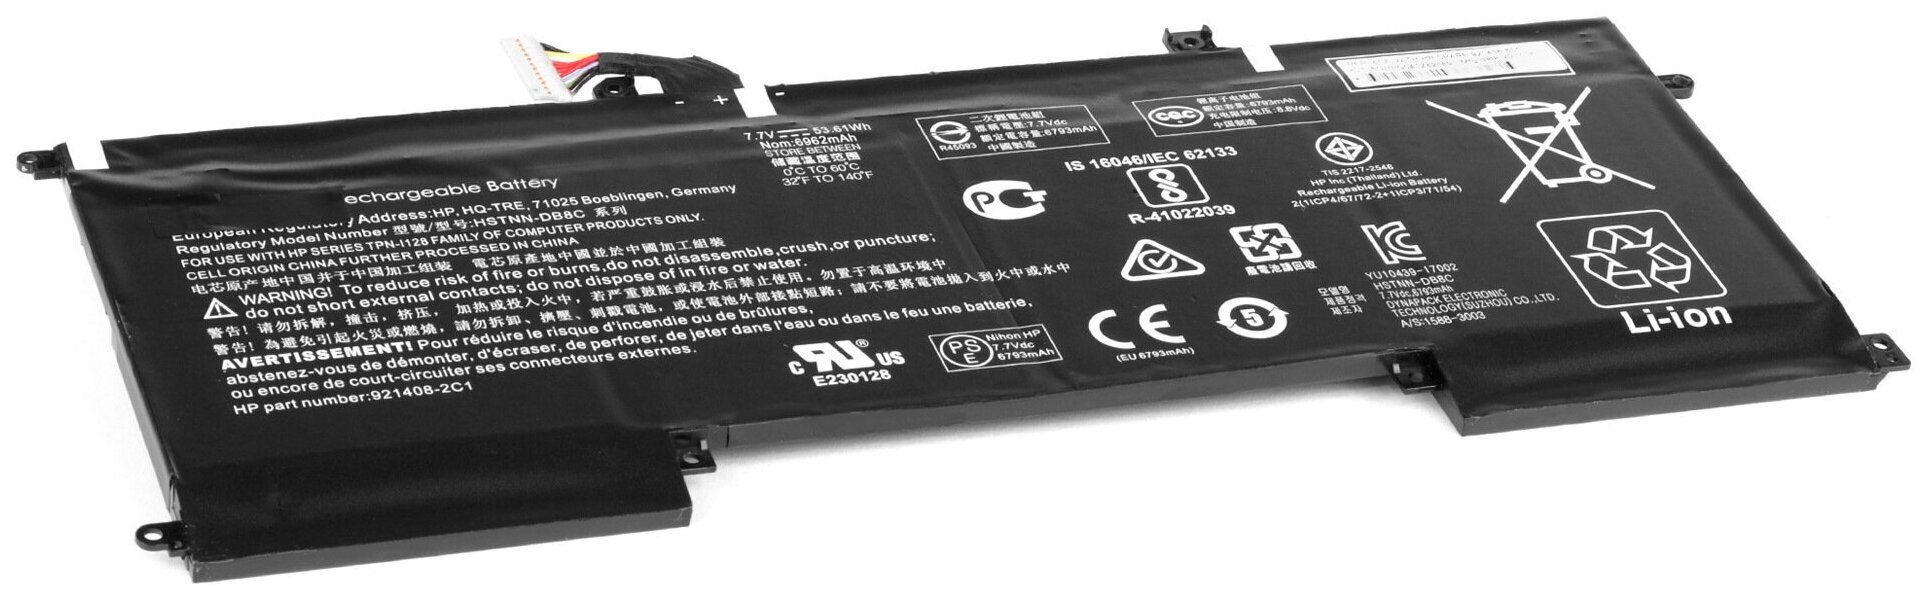 Аккумулятор для ноутбука HP ENVY 13-AD023TU (7.7V 6962mAh) P/N: AB06XL.